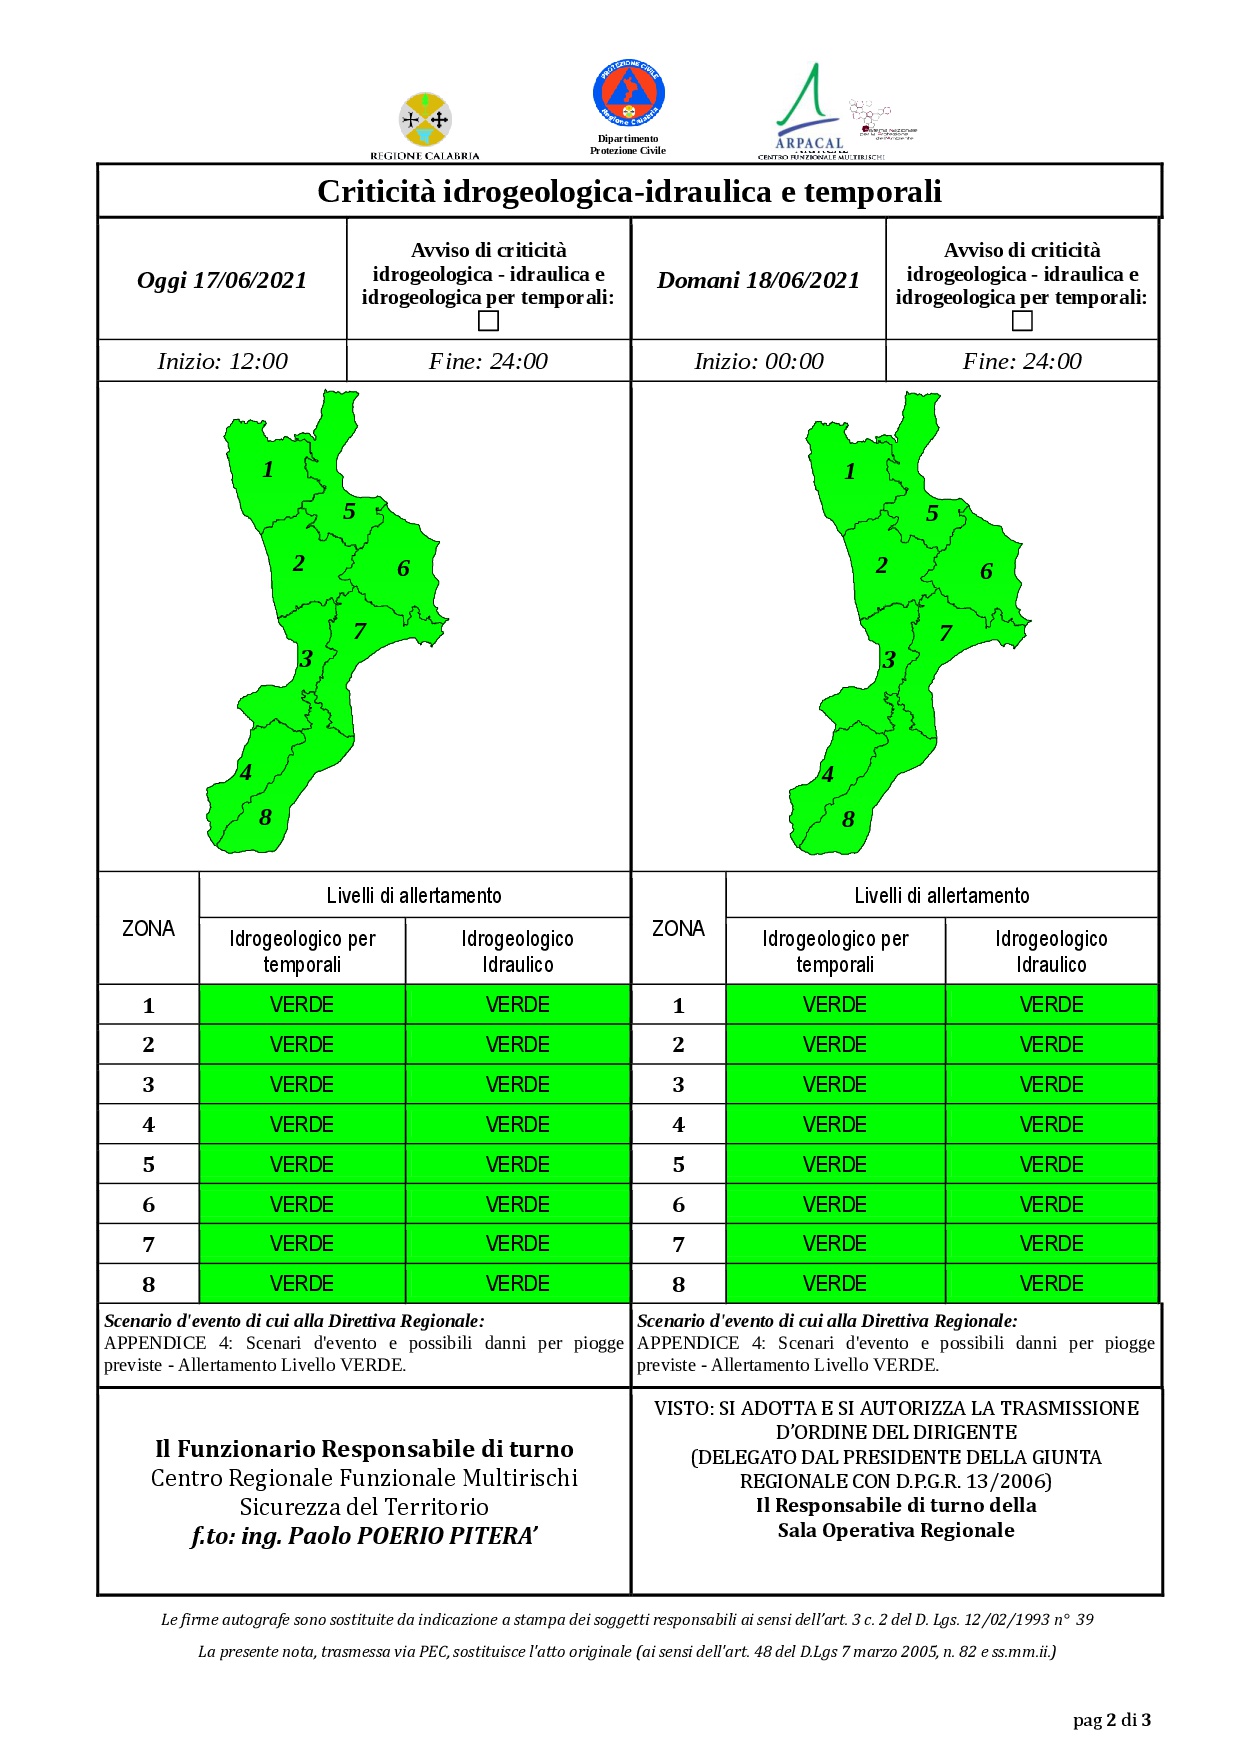 Criticità idrogeologica-idraulica e temporali in Calabria 18-06-2021